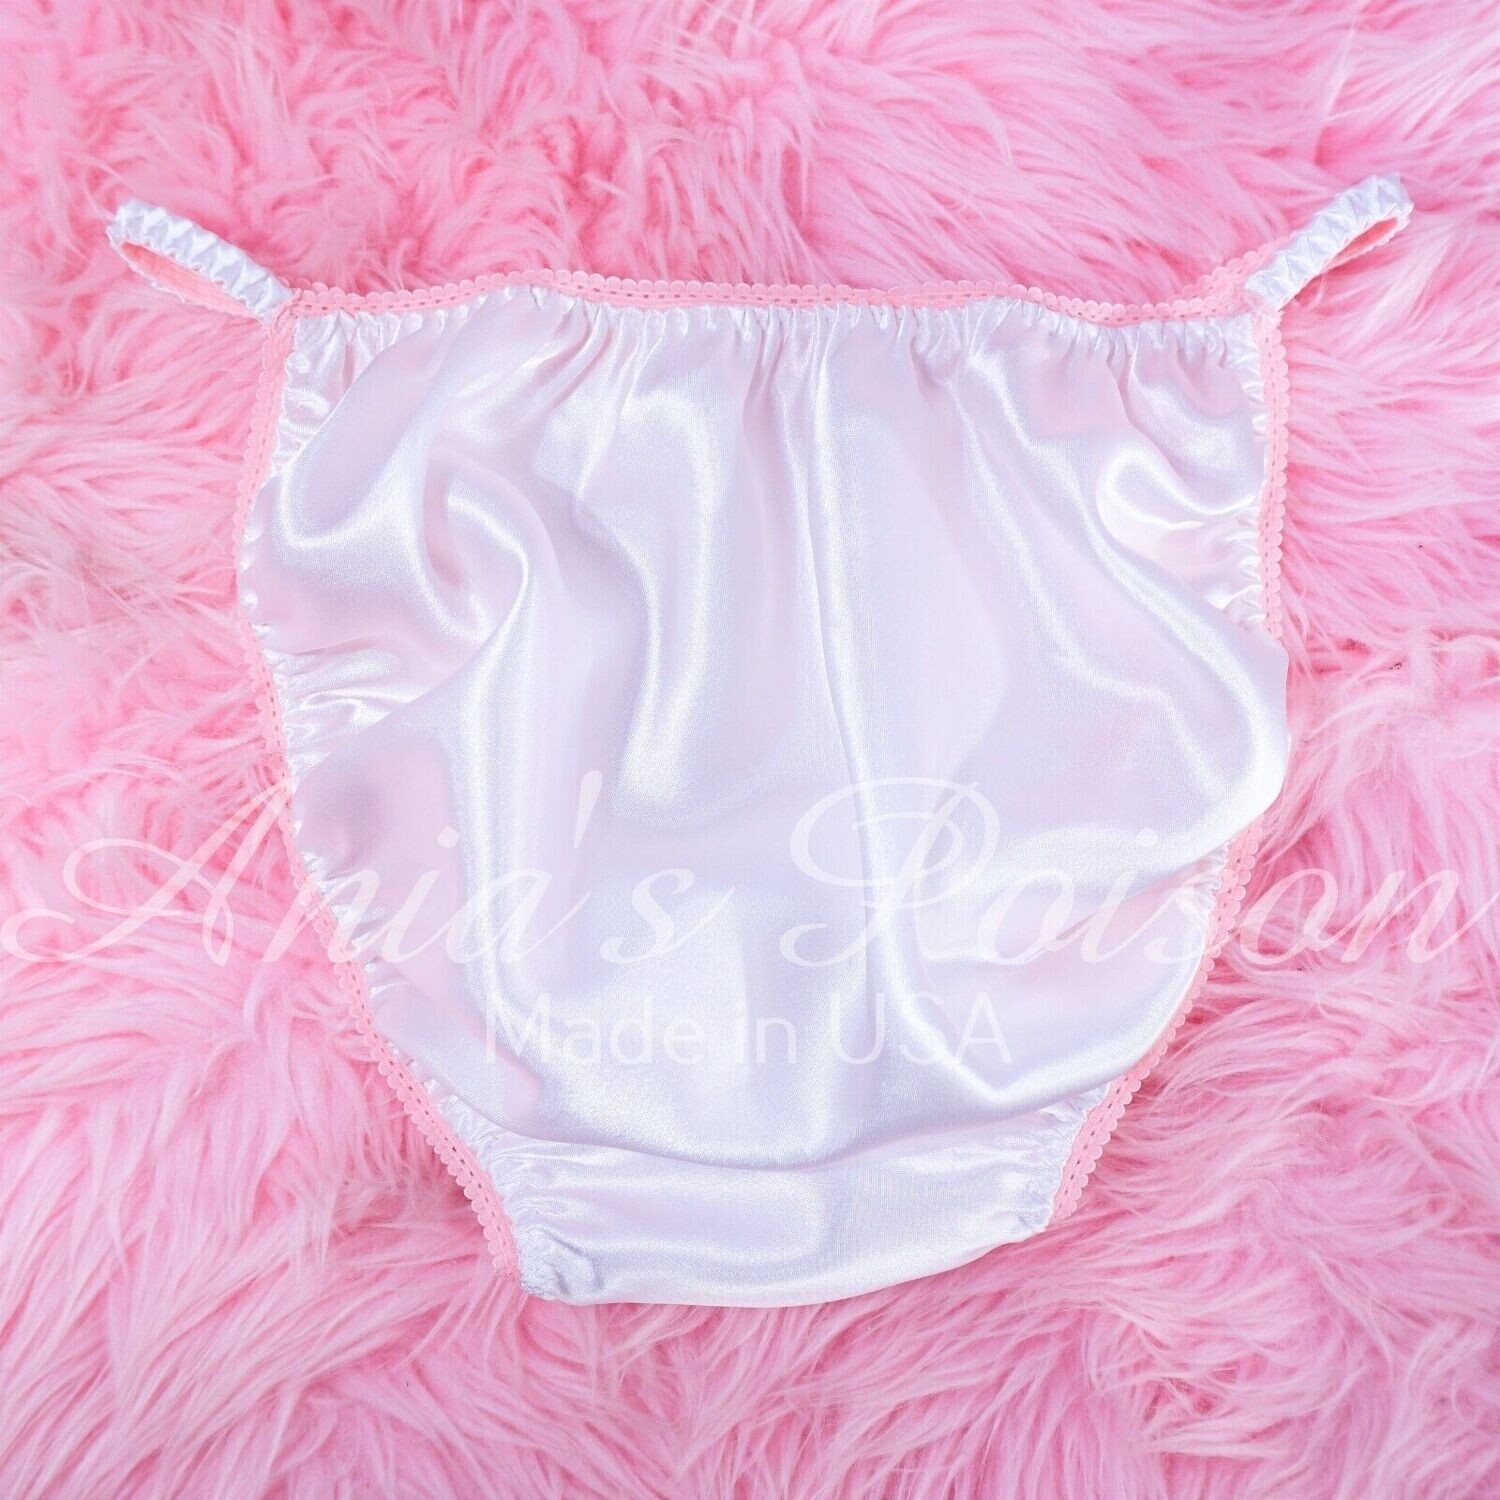 Ania's Poison Sissy Panties Hot Pink Satin String Bikini Shiny Men's Panties Underwear S-2X S 